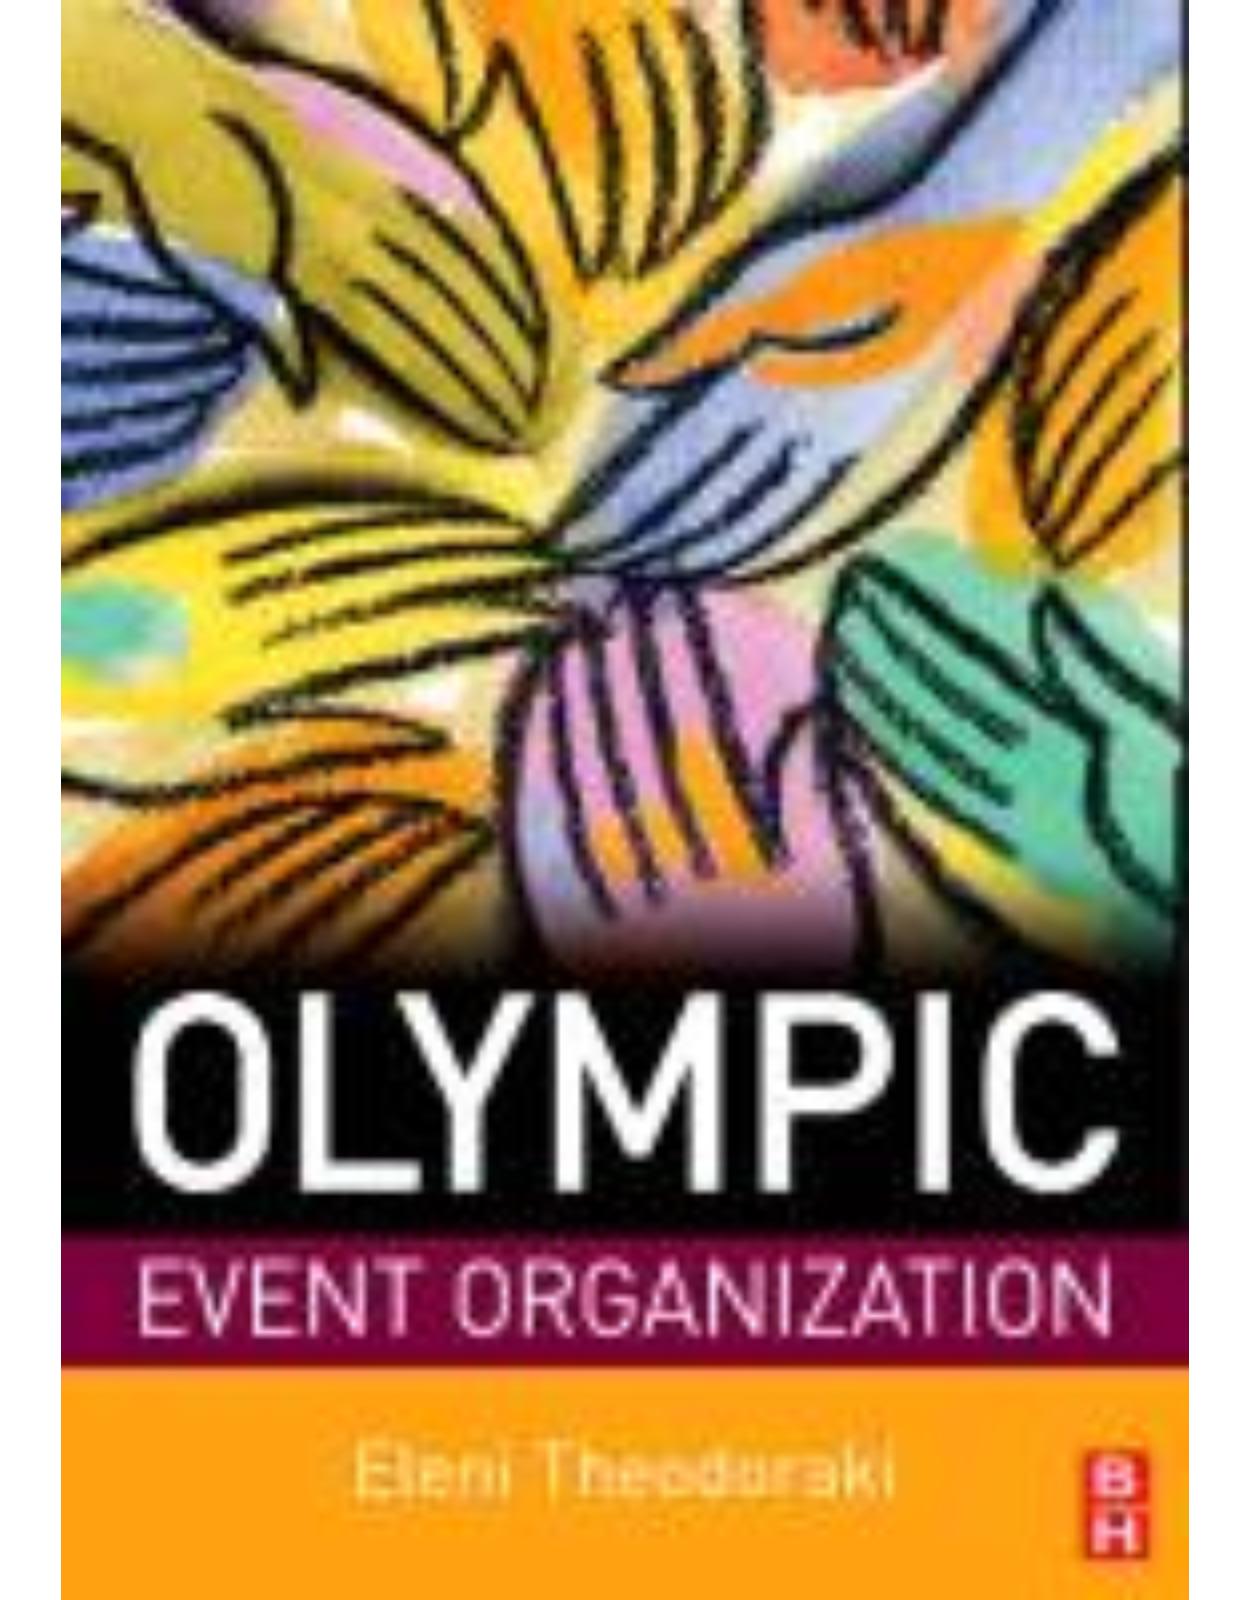 Olympic Event Organization